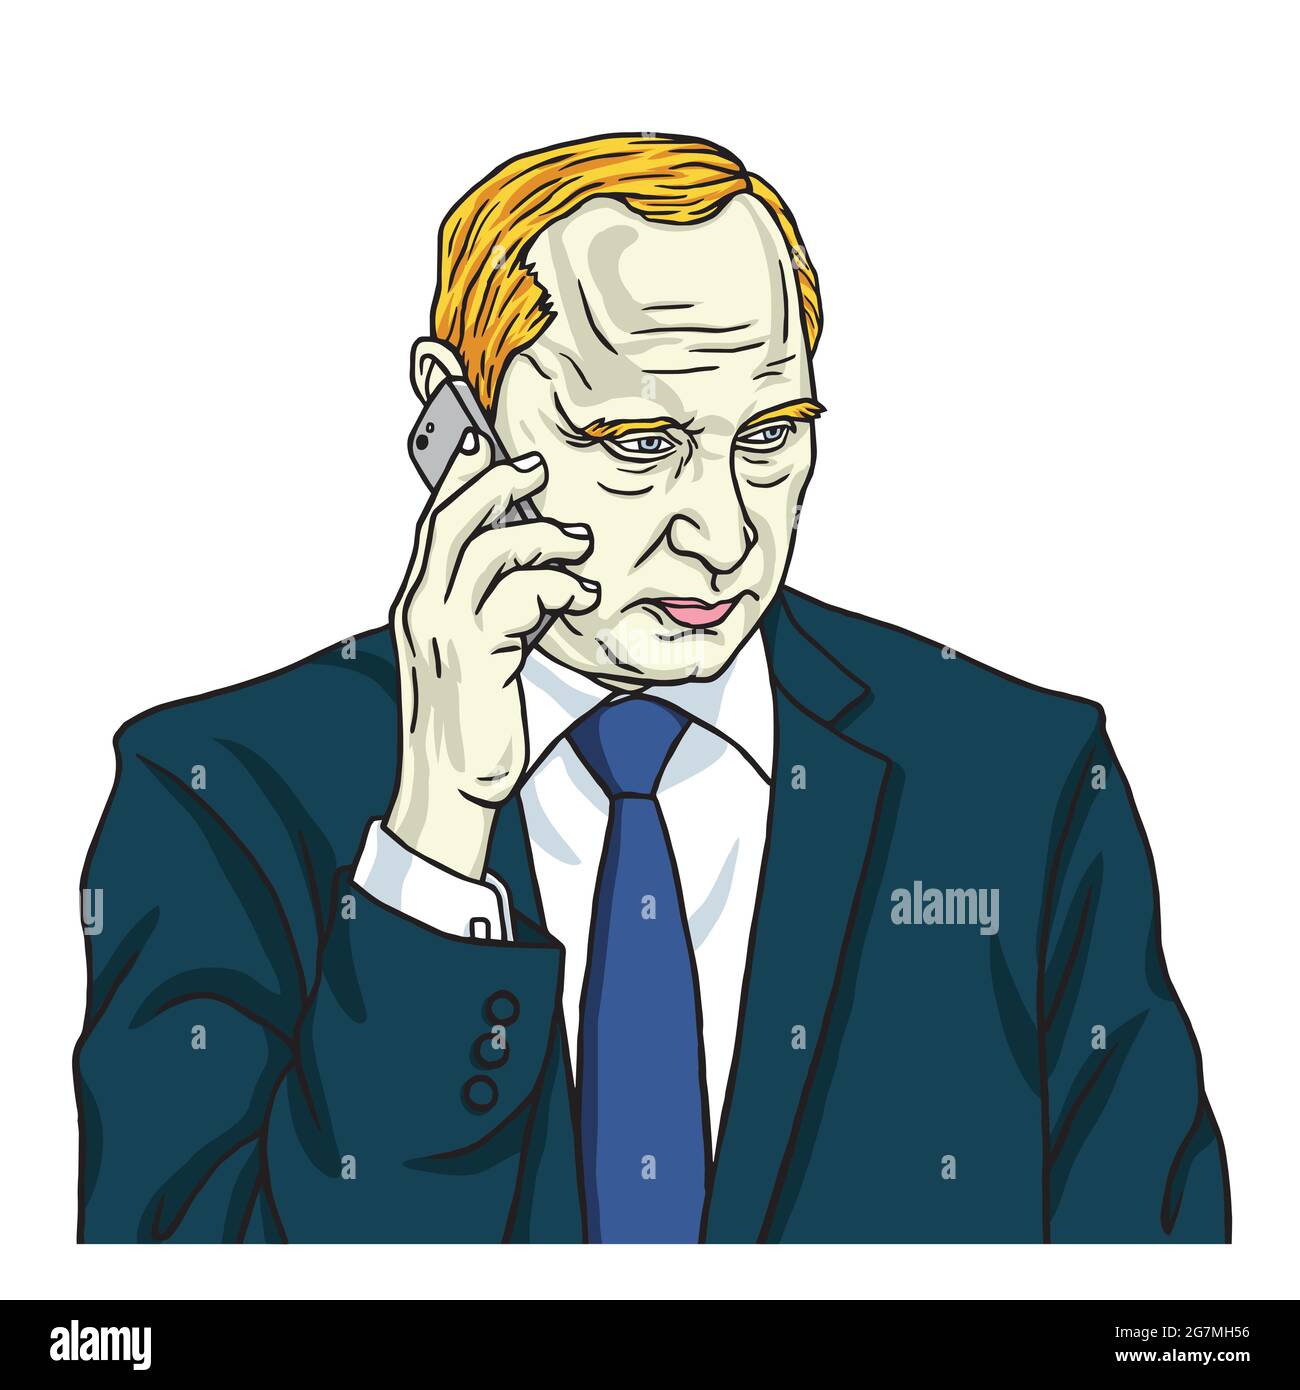 Wladimir Putin am Telefon. Vektorporträt Cartoon Karikatur Stock Vektor